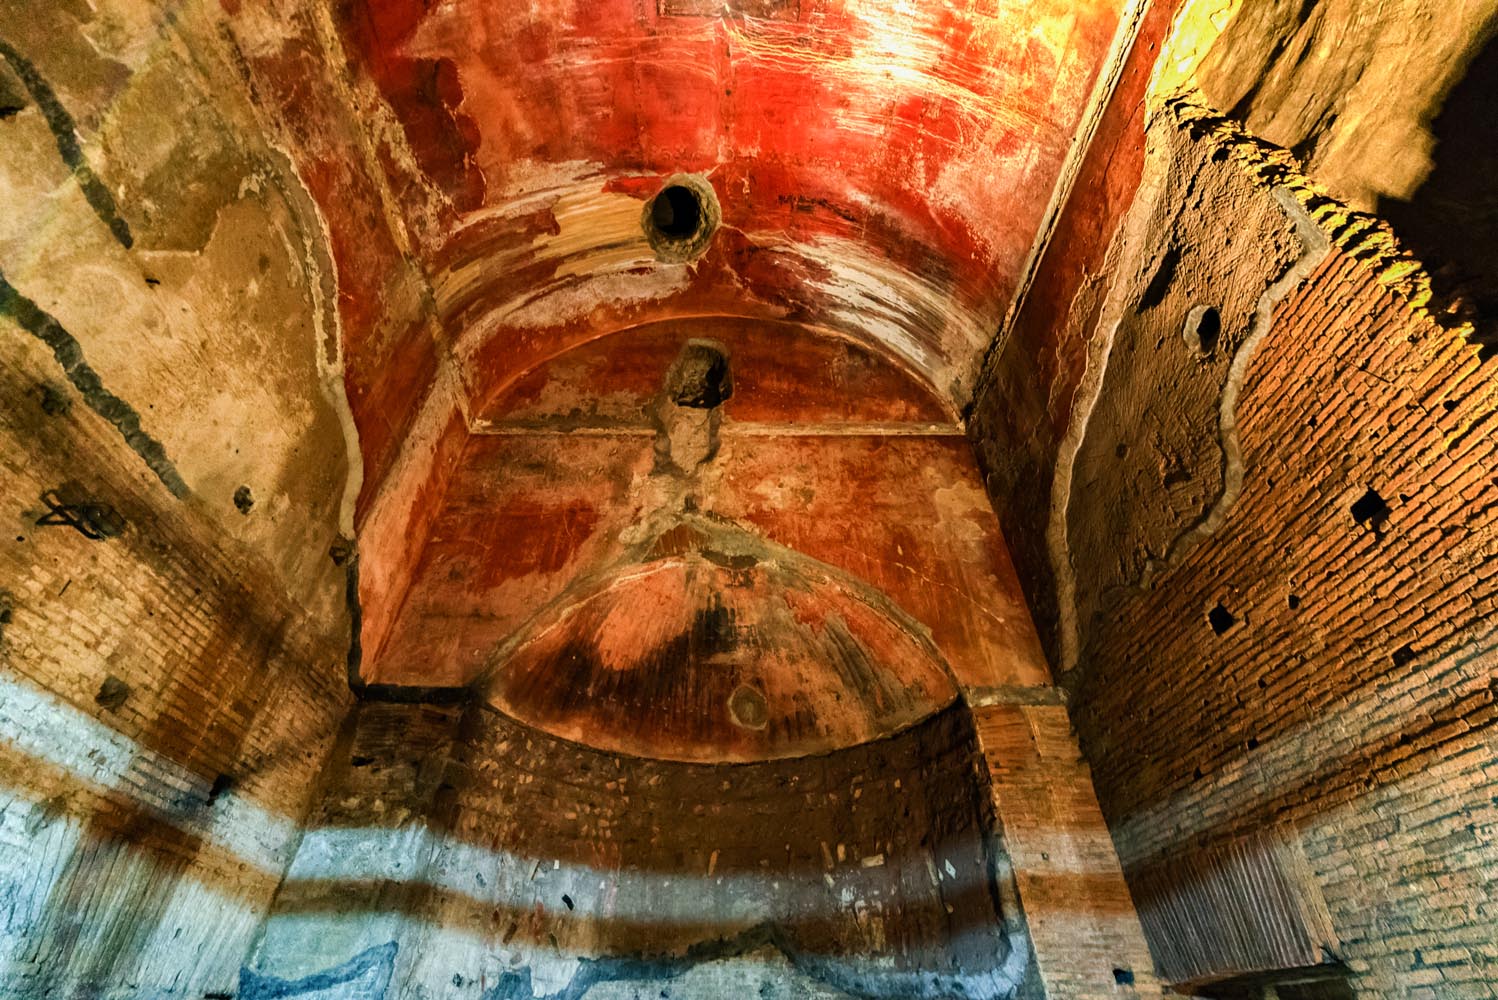 palace of Nero: the red fresco